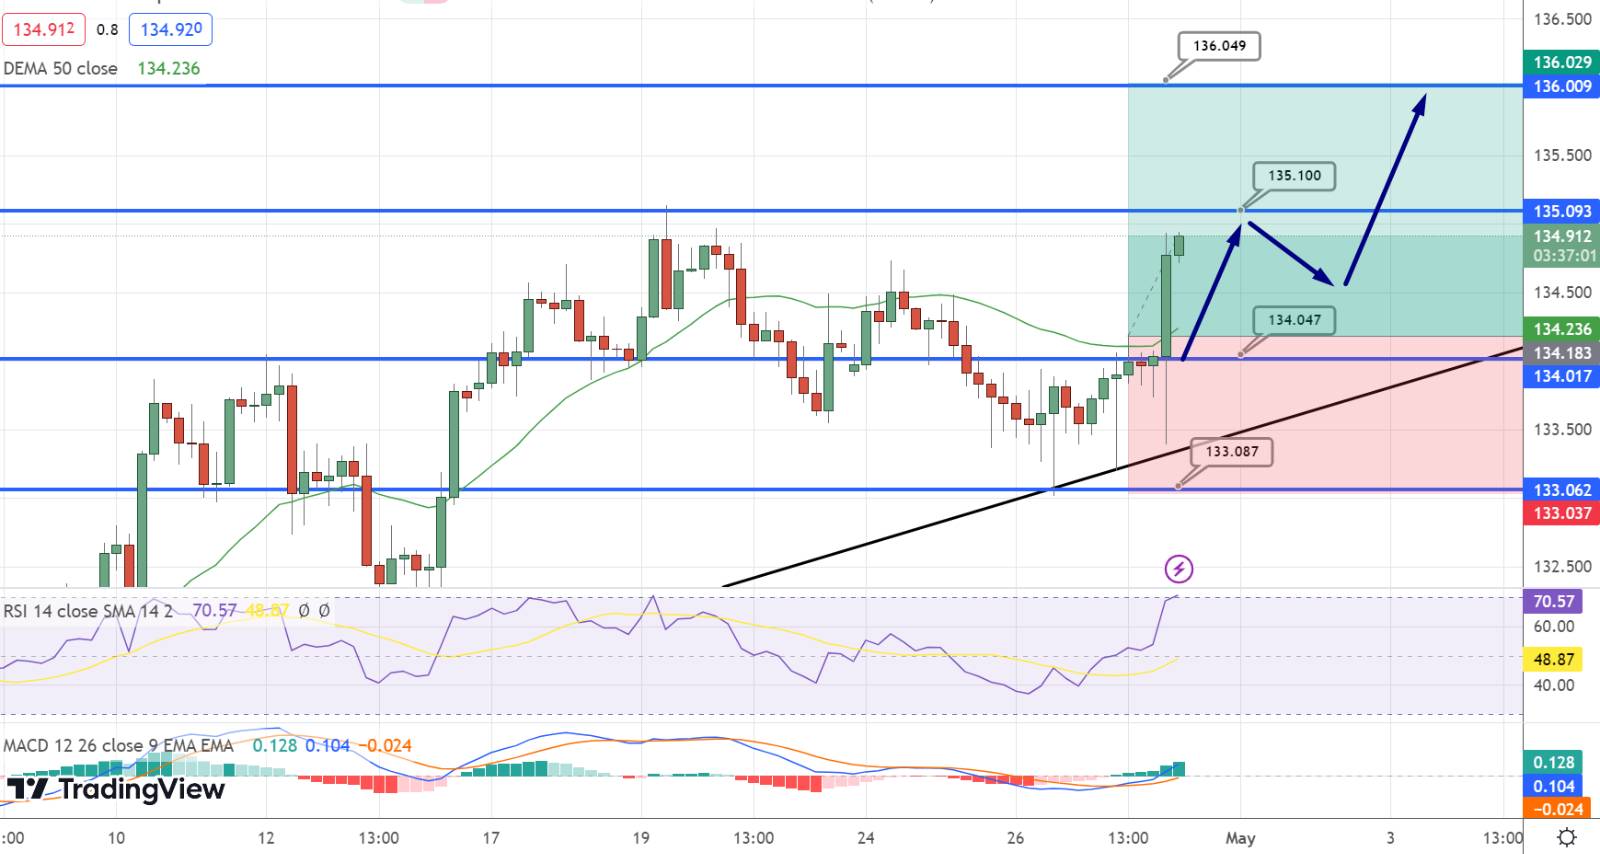  USD/JPY Price Chart - Source: Tradingview